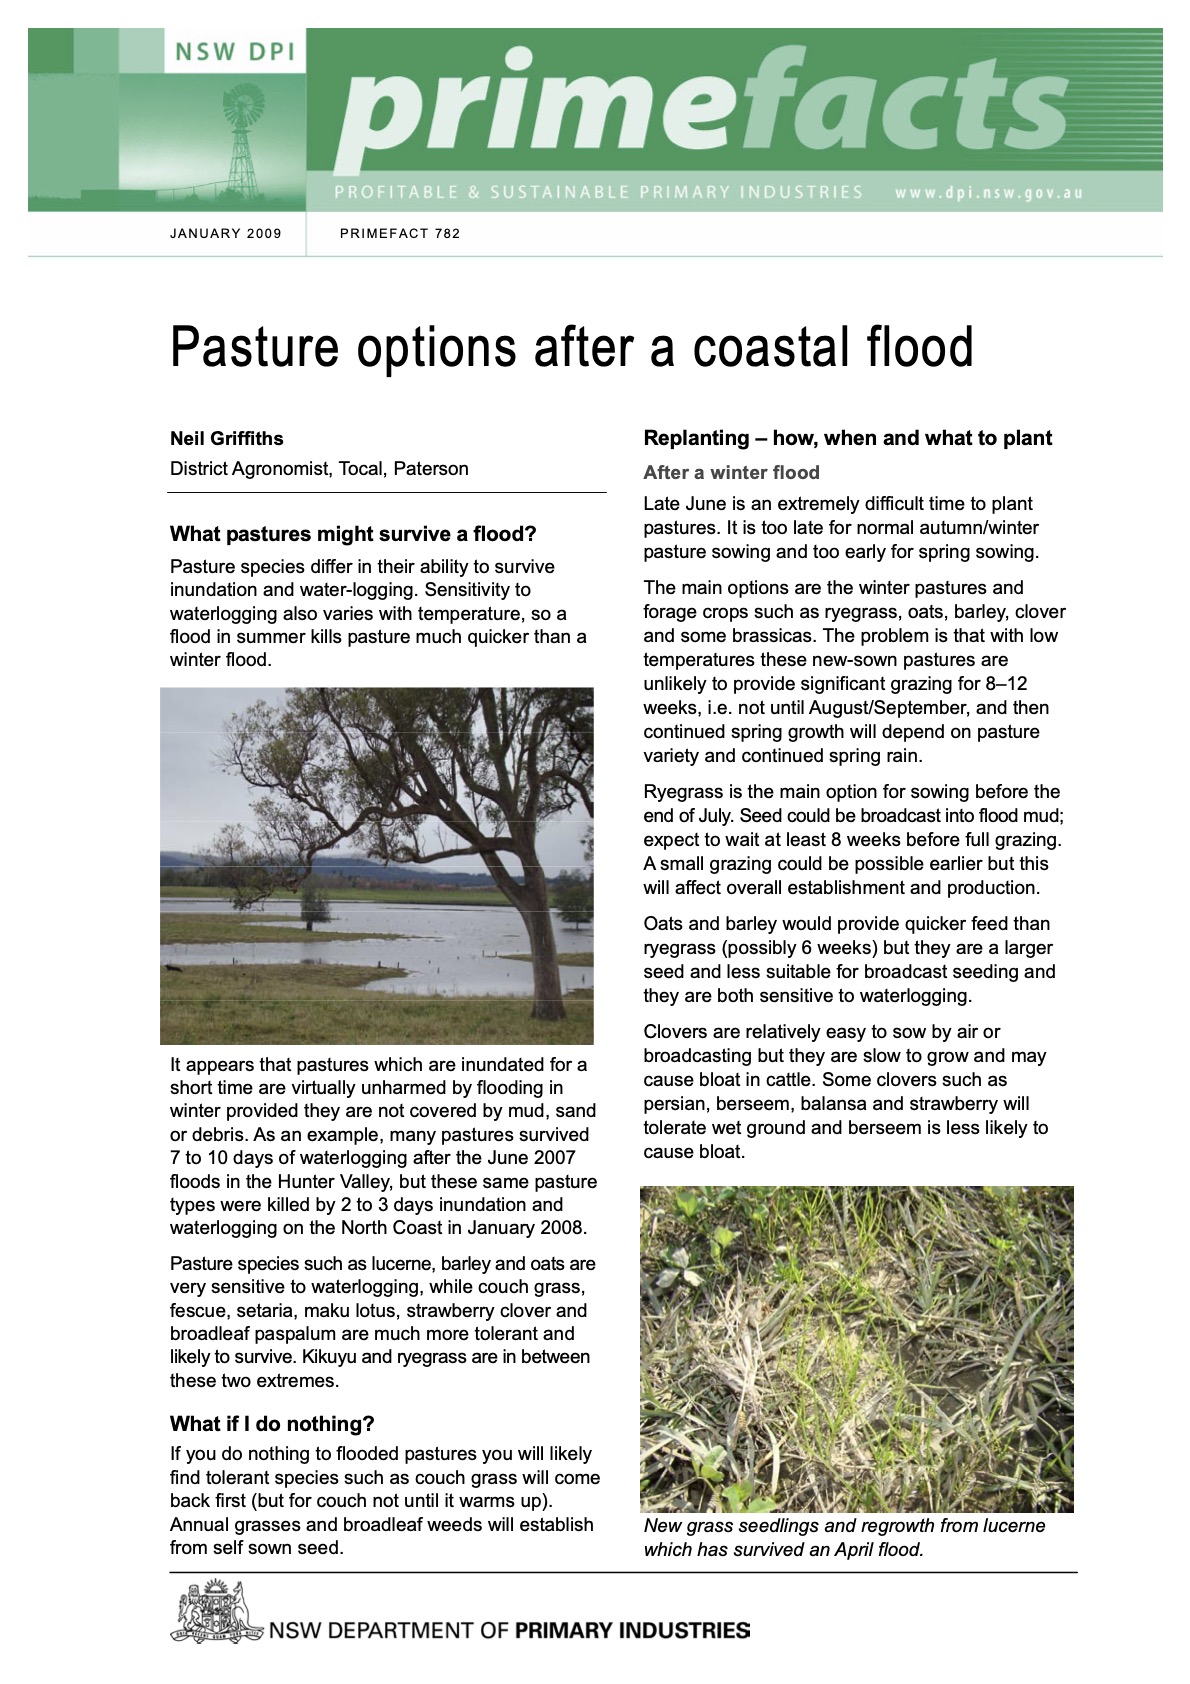 Pasture-options-after-a-coastal-flood